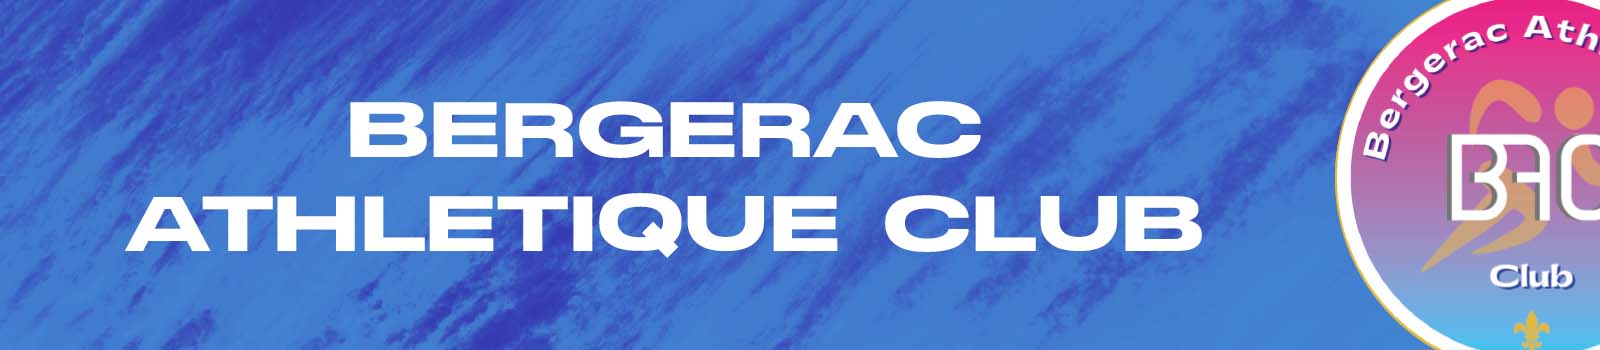 Bergerac Athletique Club